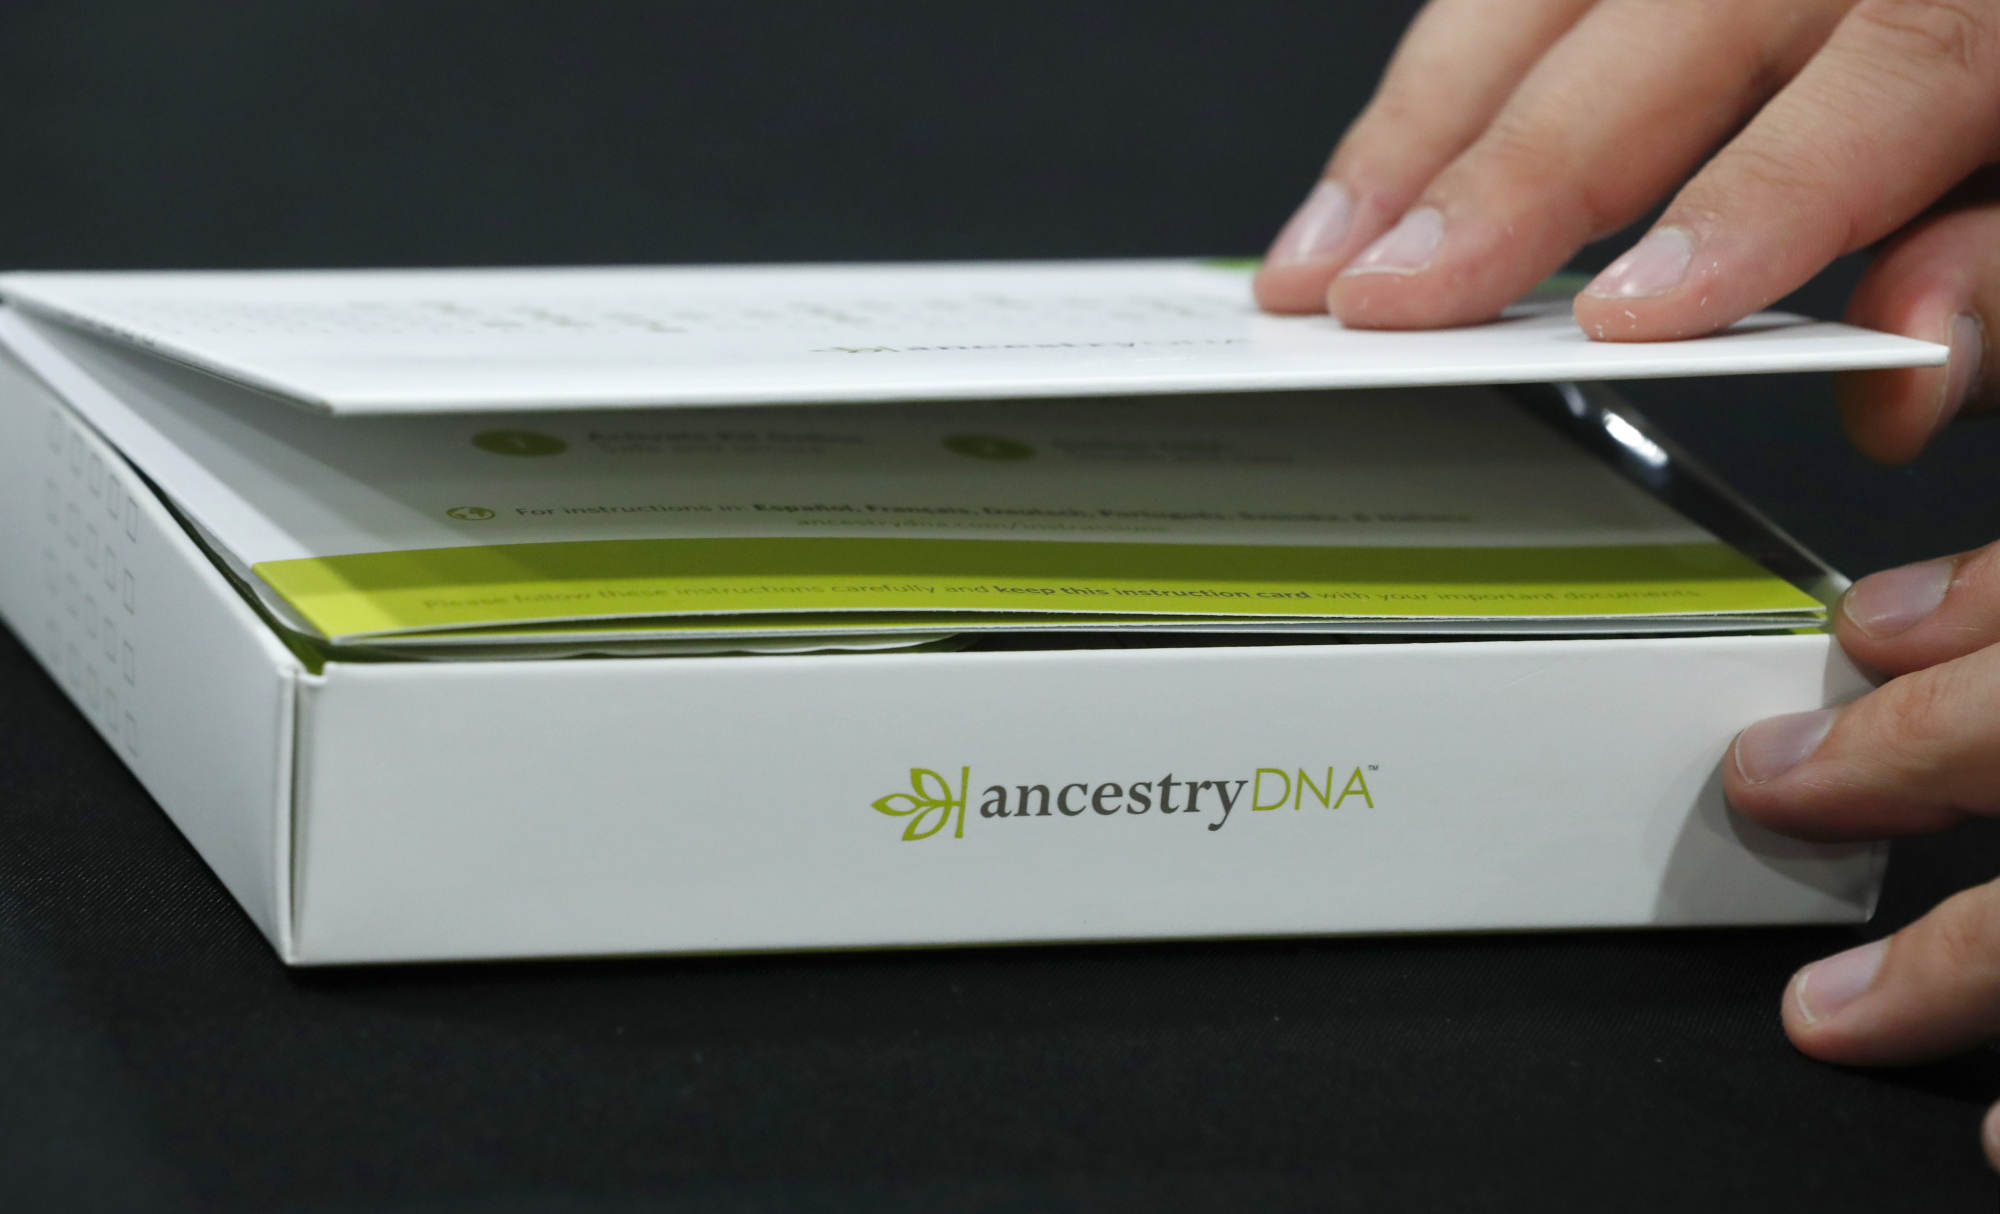 An Ancestry.com Inc. DNA kit